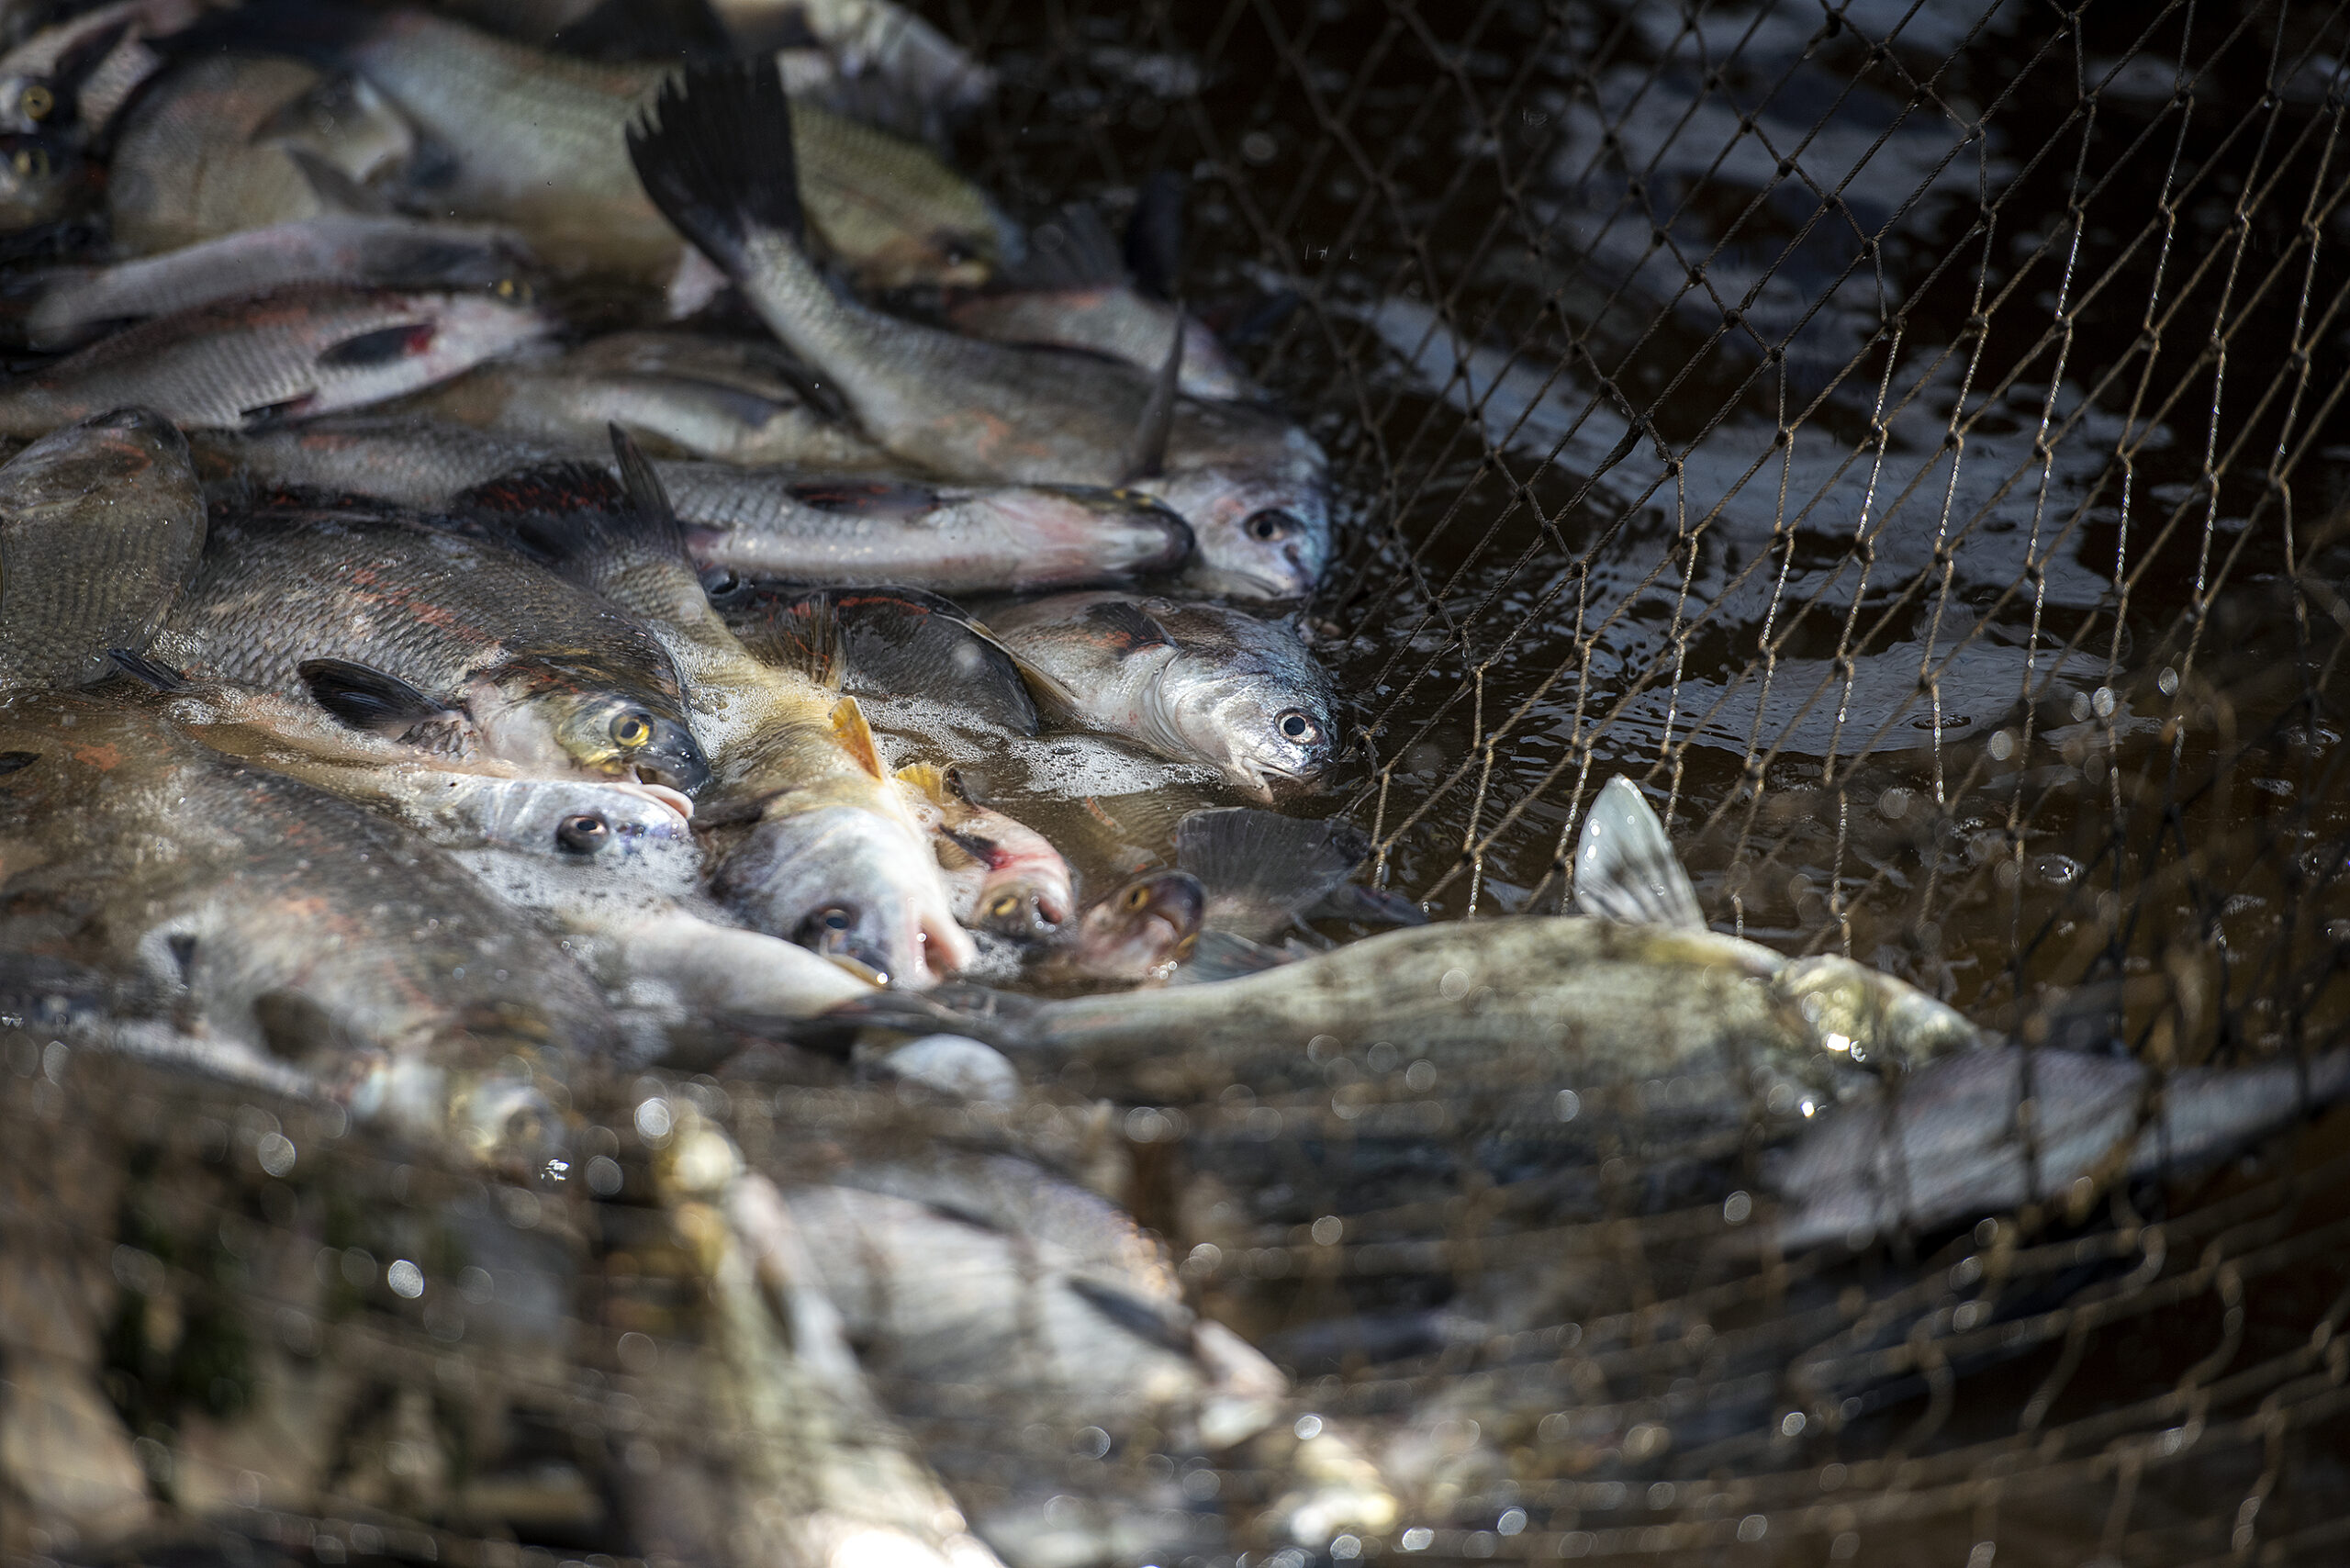 ‘So far, so good’: Biologists welcome stall in carp nearing Lake Michigan